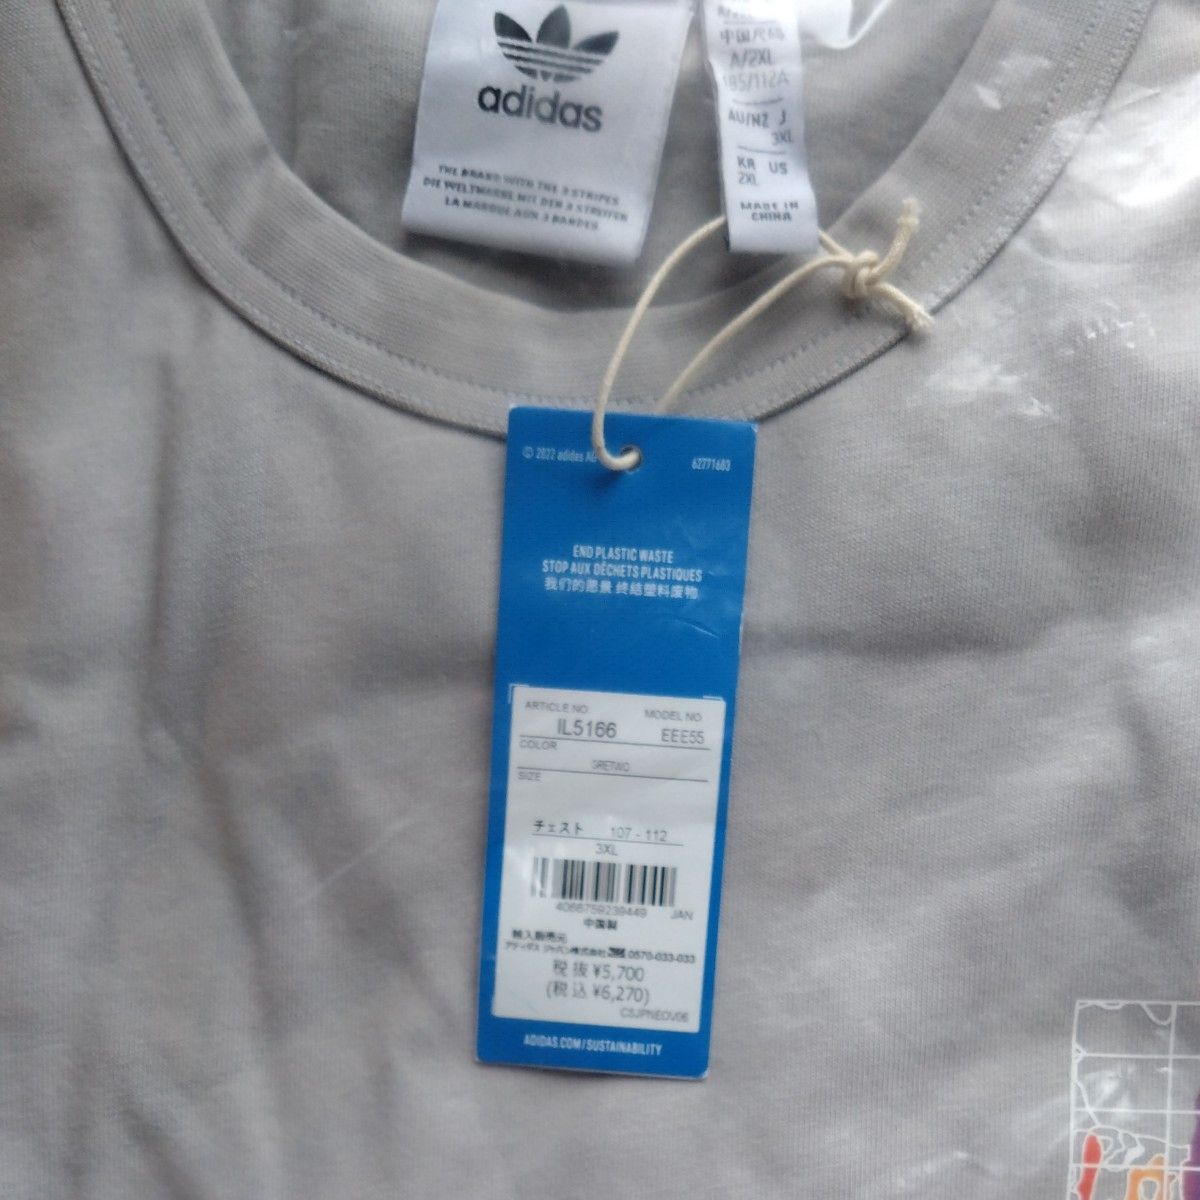 【4L】アディダスオリジナルス アドベンチャー グラフィック 半袖Tシャツ 新品未使用 タグ付き レギュラーフィット